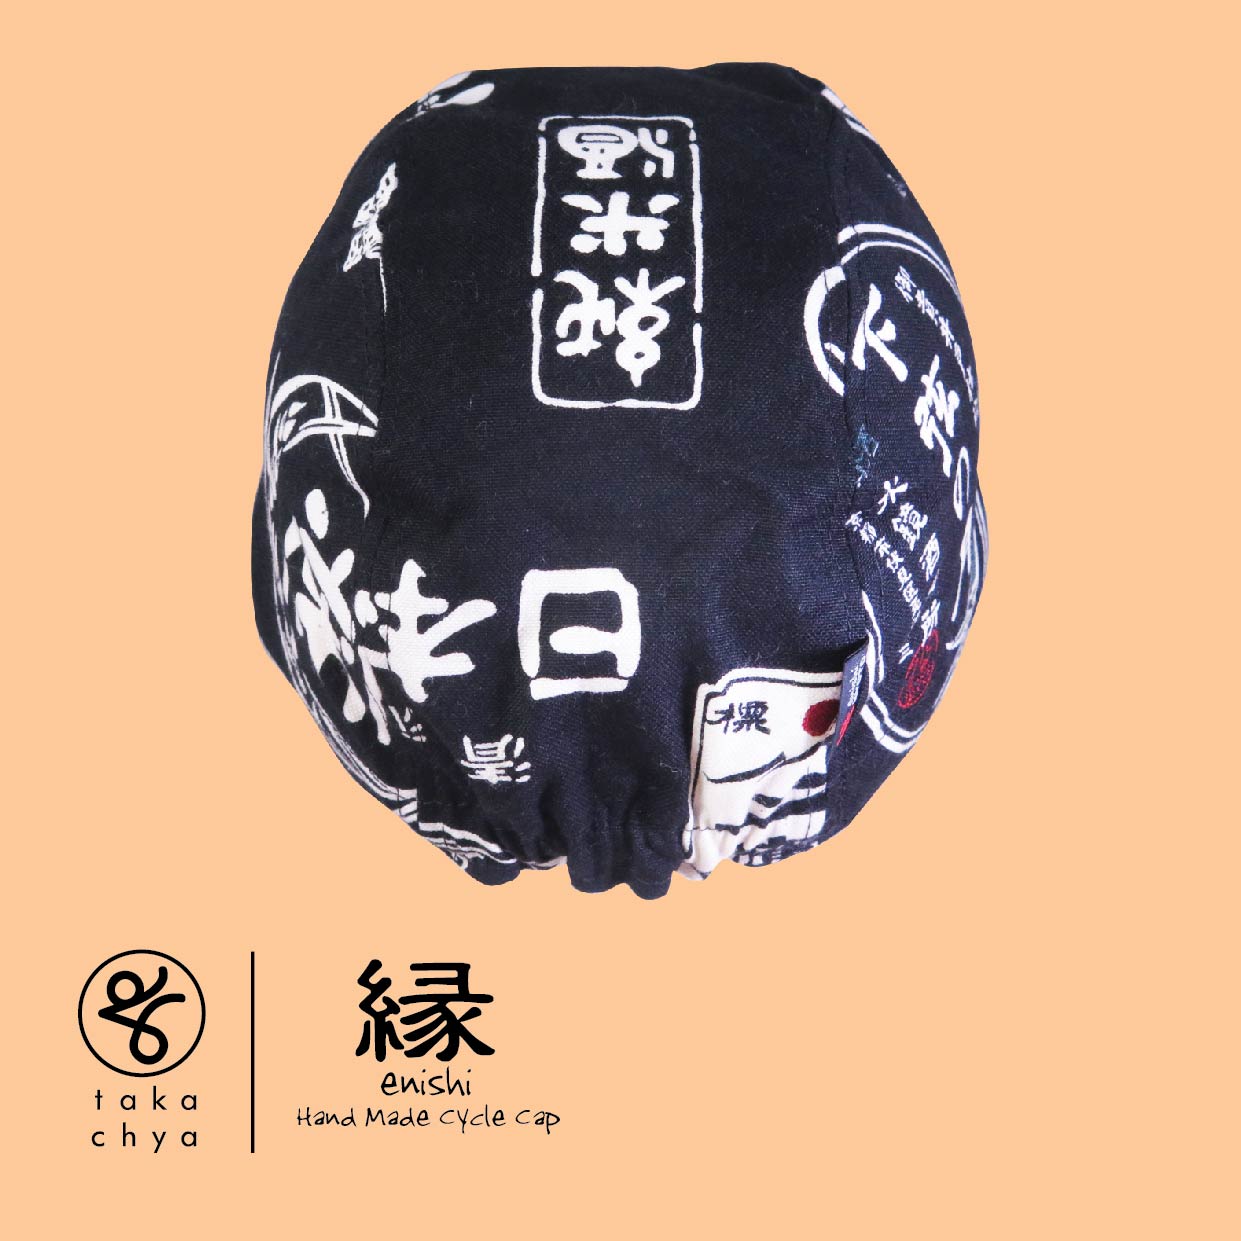 ENISHI 日本酒物語・黒 / NIHONSYU MONOGATARI・BLACK HANDMADE CYCLING CAP